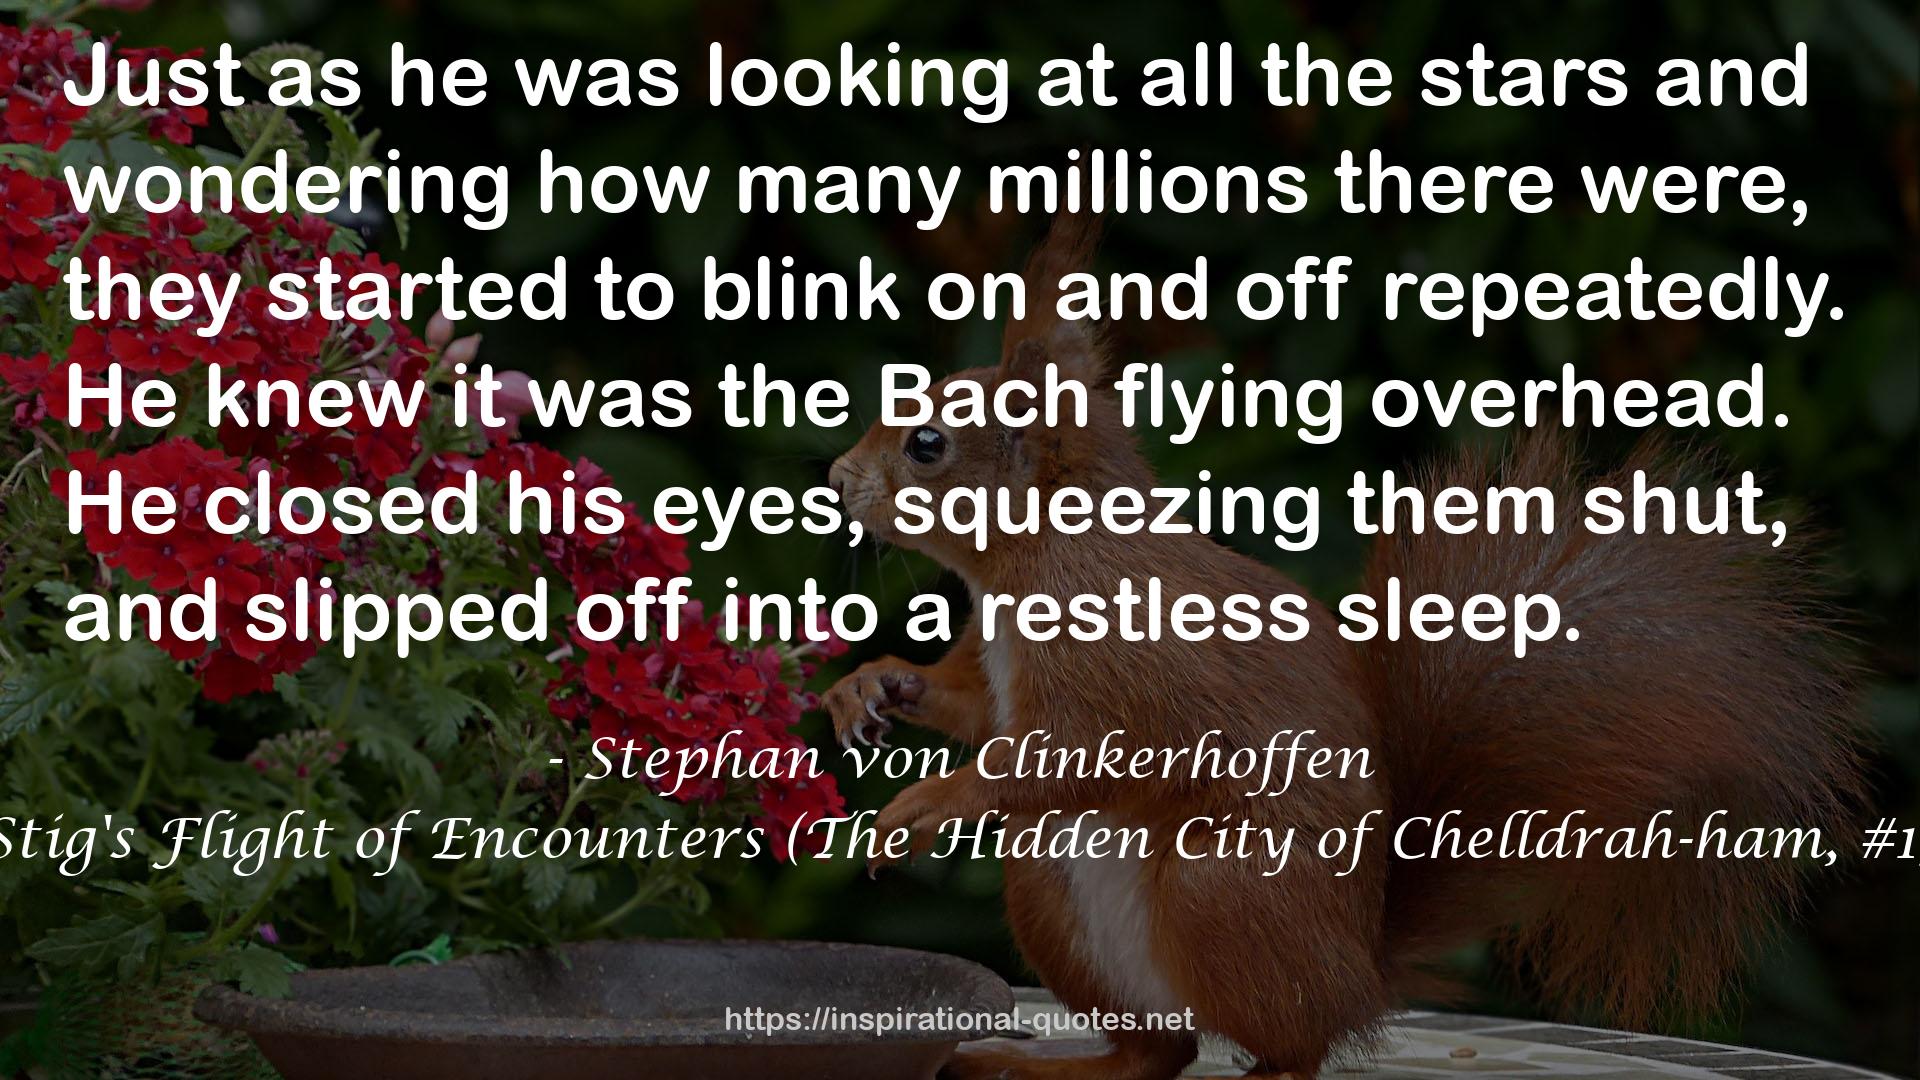 Stig's Flight of Encounters (The Hidden City of Chelldrah-ham, #1) QUOTES